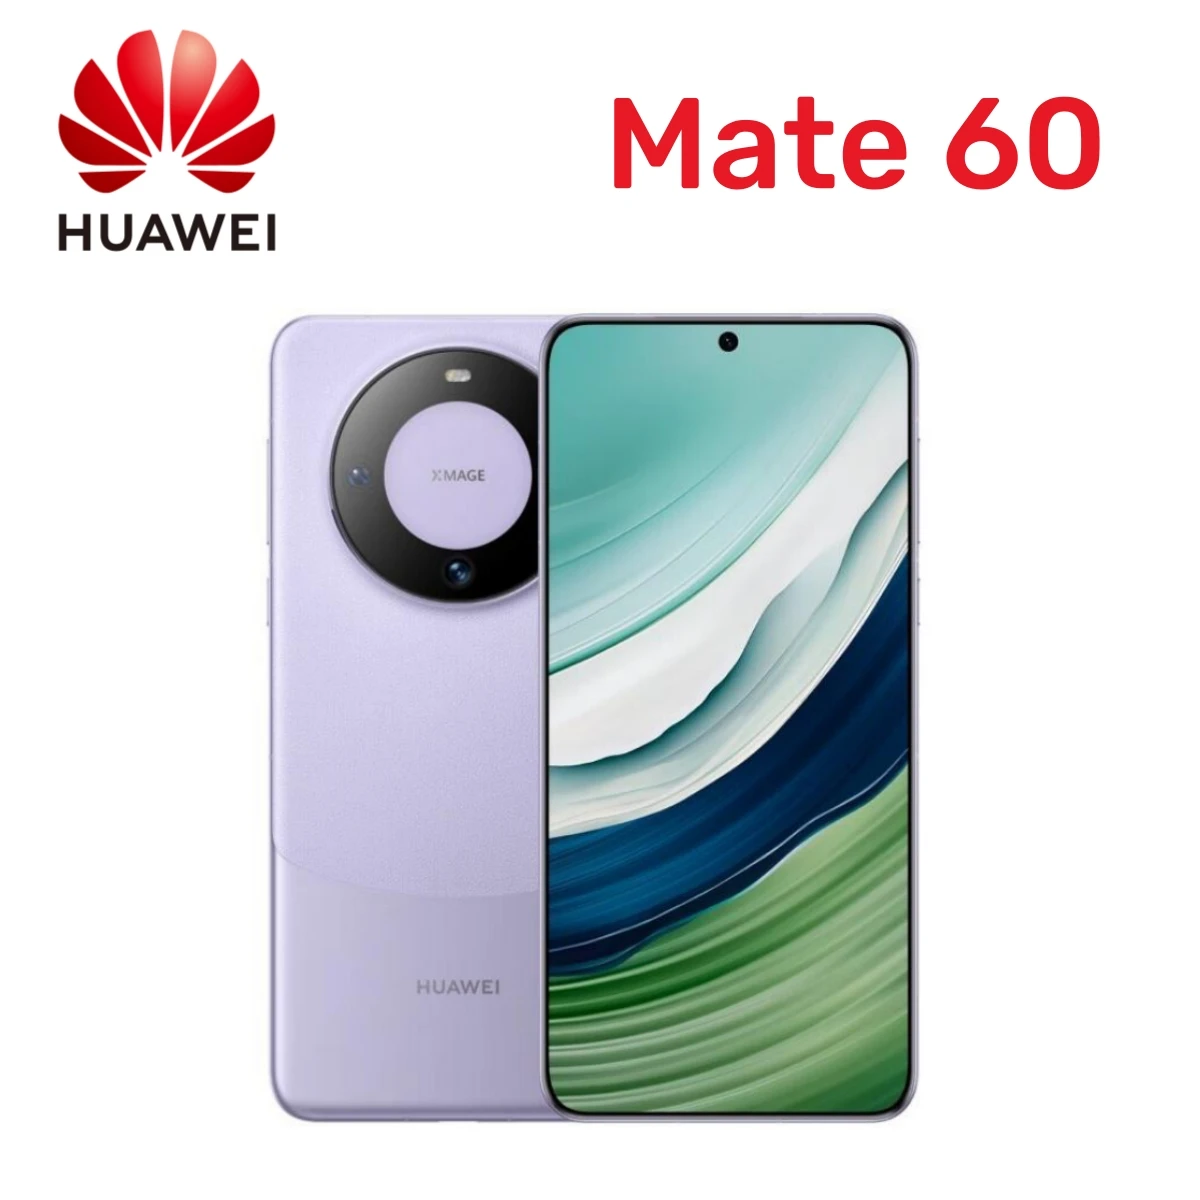 HUAWEI Mate 60 Smartphone HarmonyOS 4.0 Kirin 9000S (7 nm) 66W wired Charging 6.69 inch Mobile phones IP68 Waterproof Cell phone